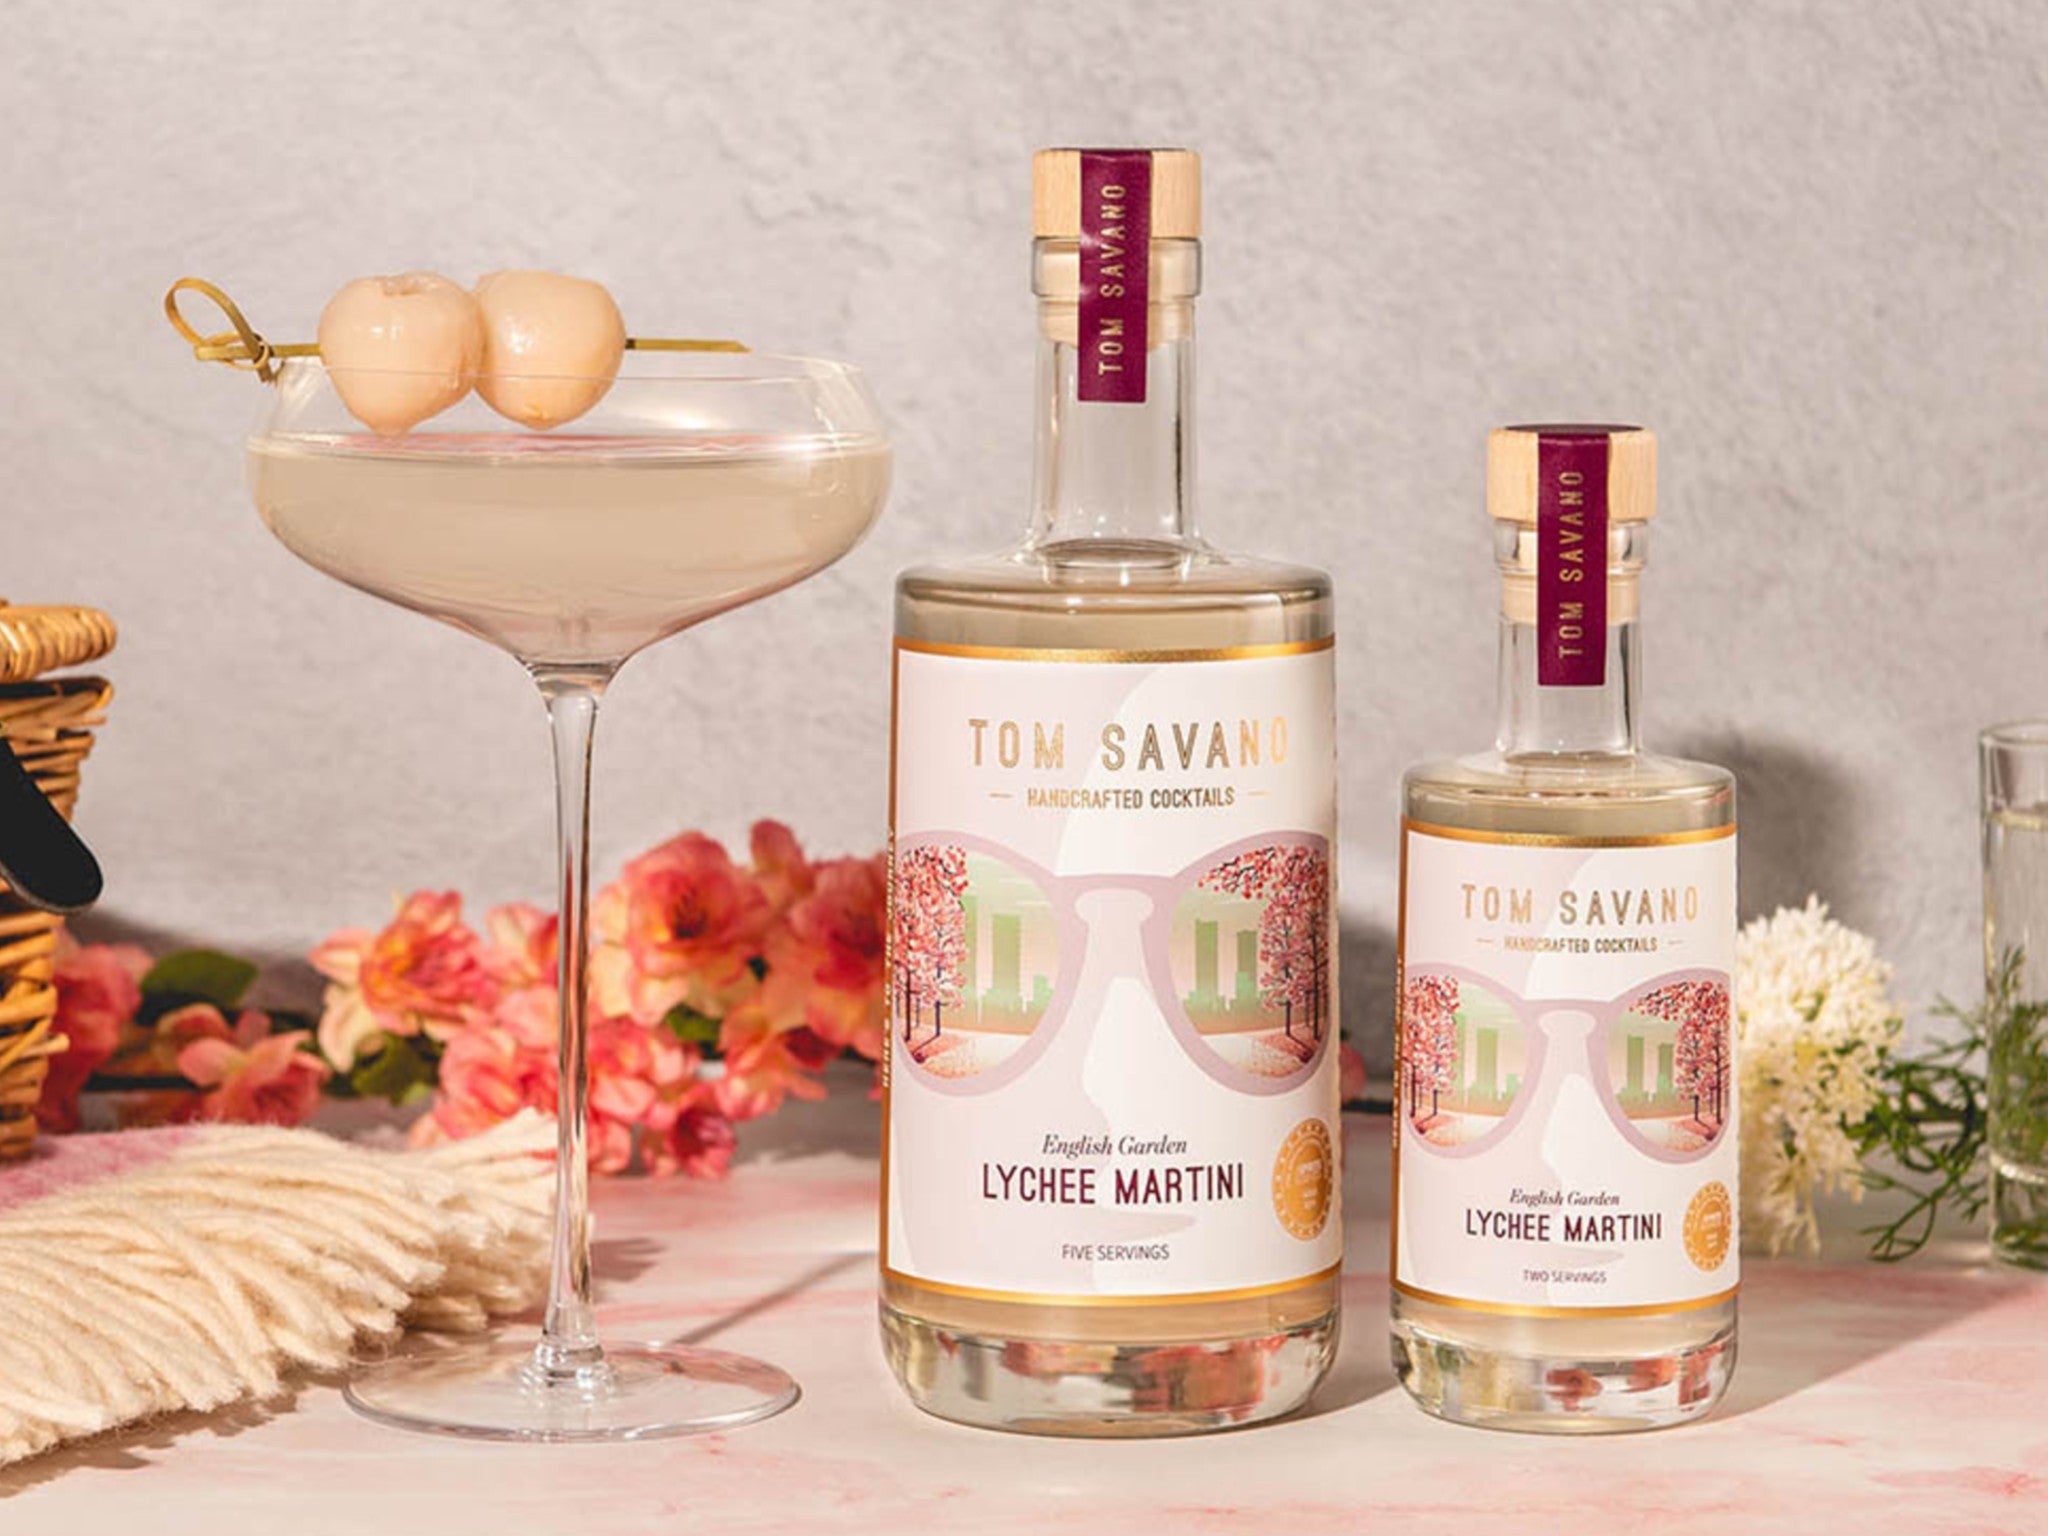 Tom Savano Handcrafted Cocktails lychee martini, 200ml indybest.jpeg